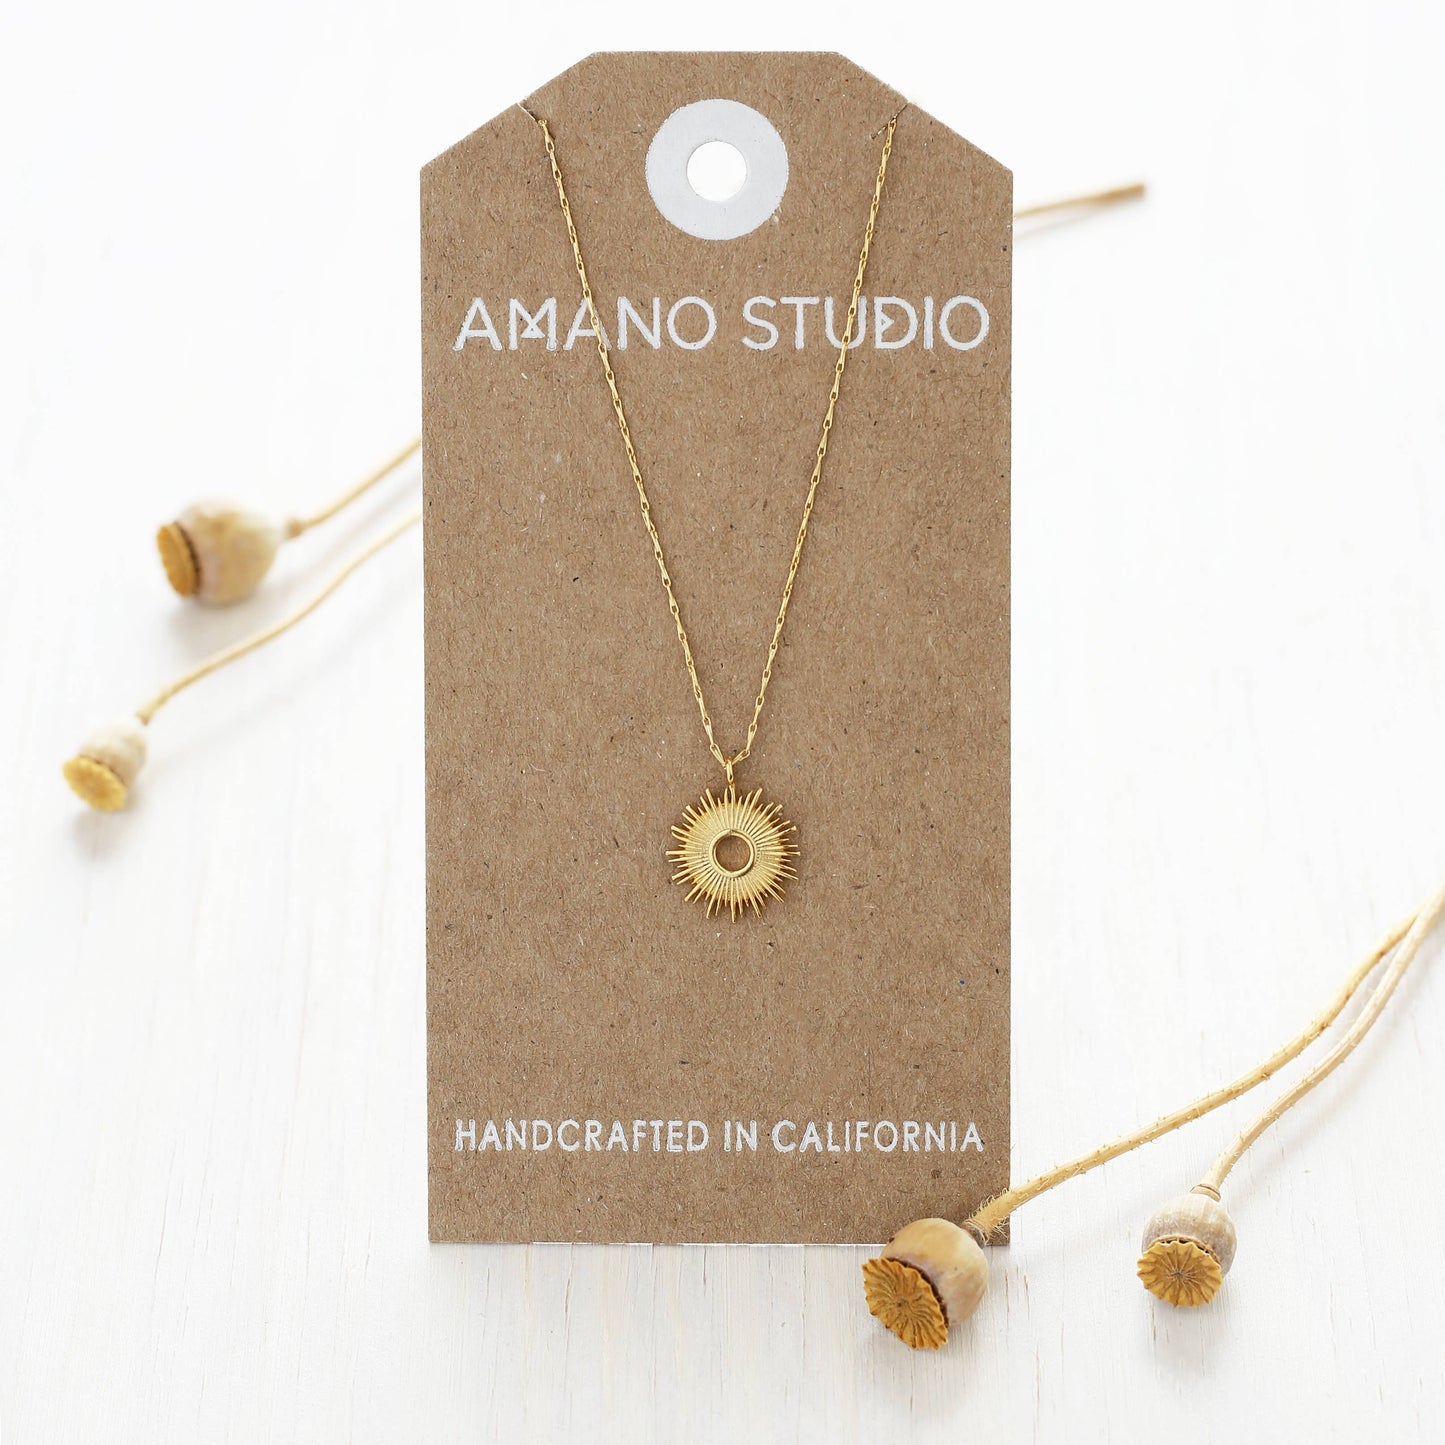 Amano Studio - Sunburst Necklace